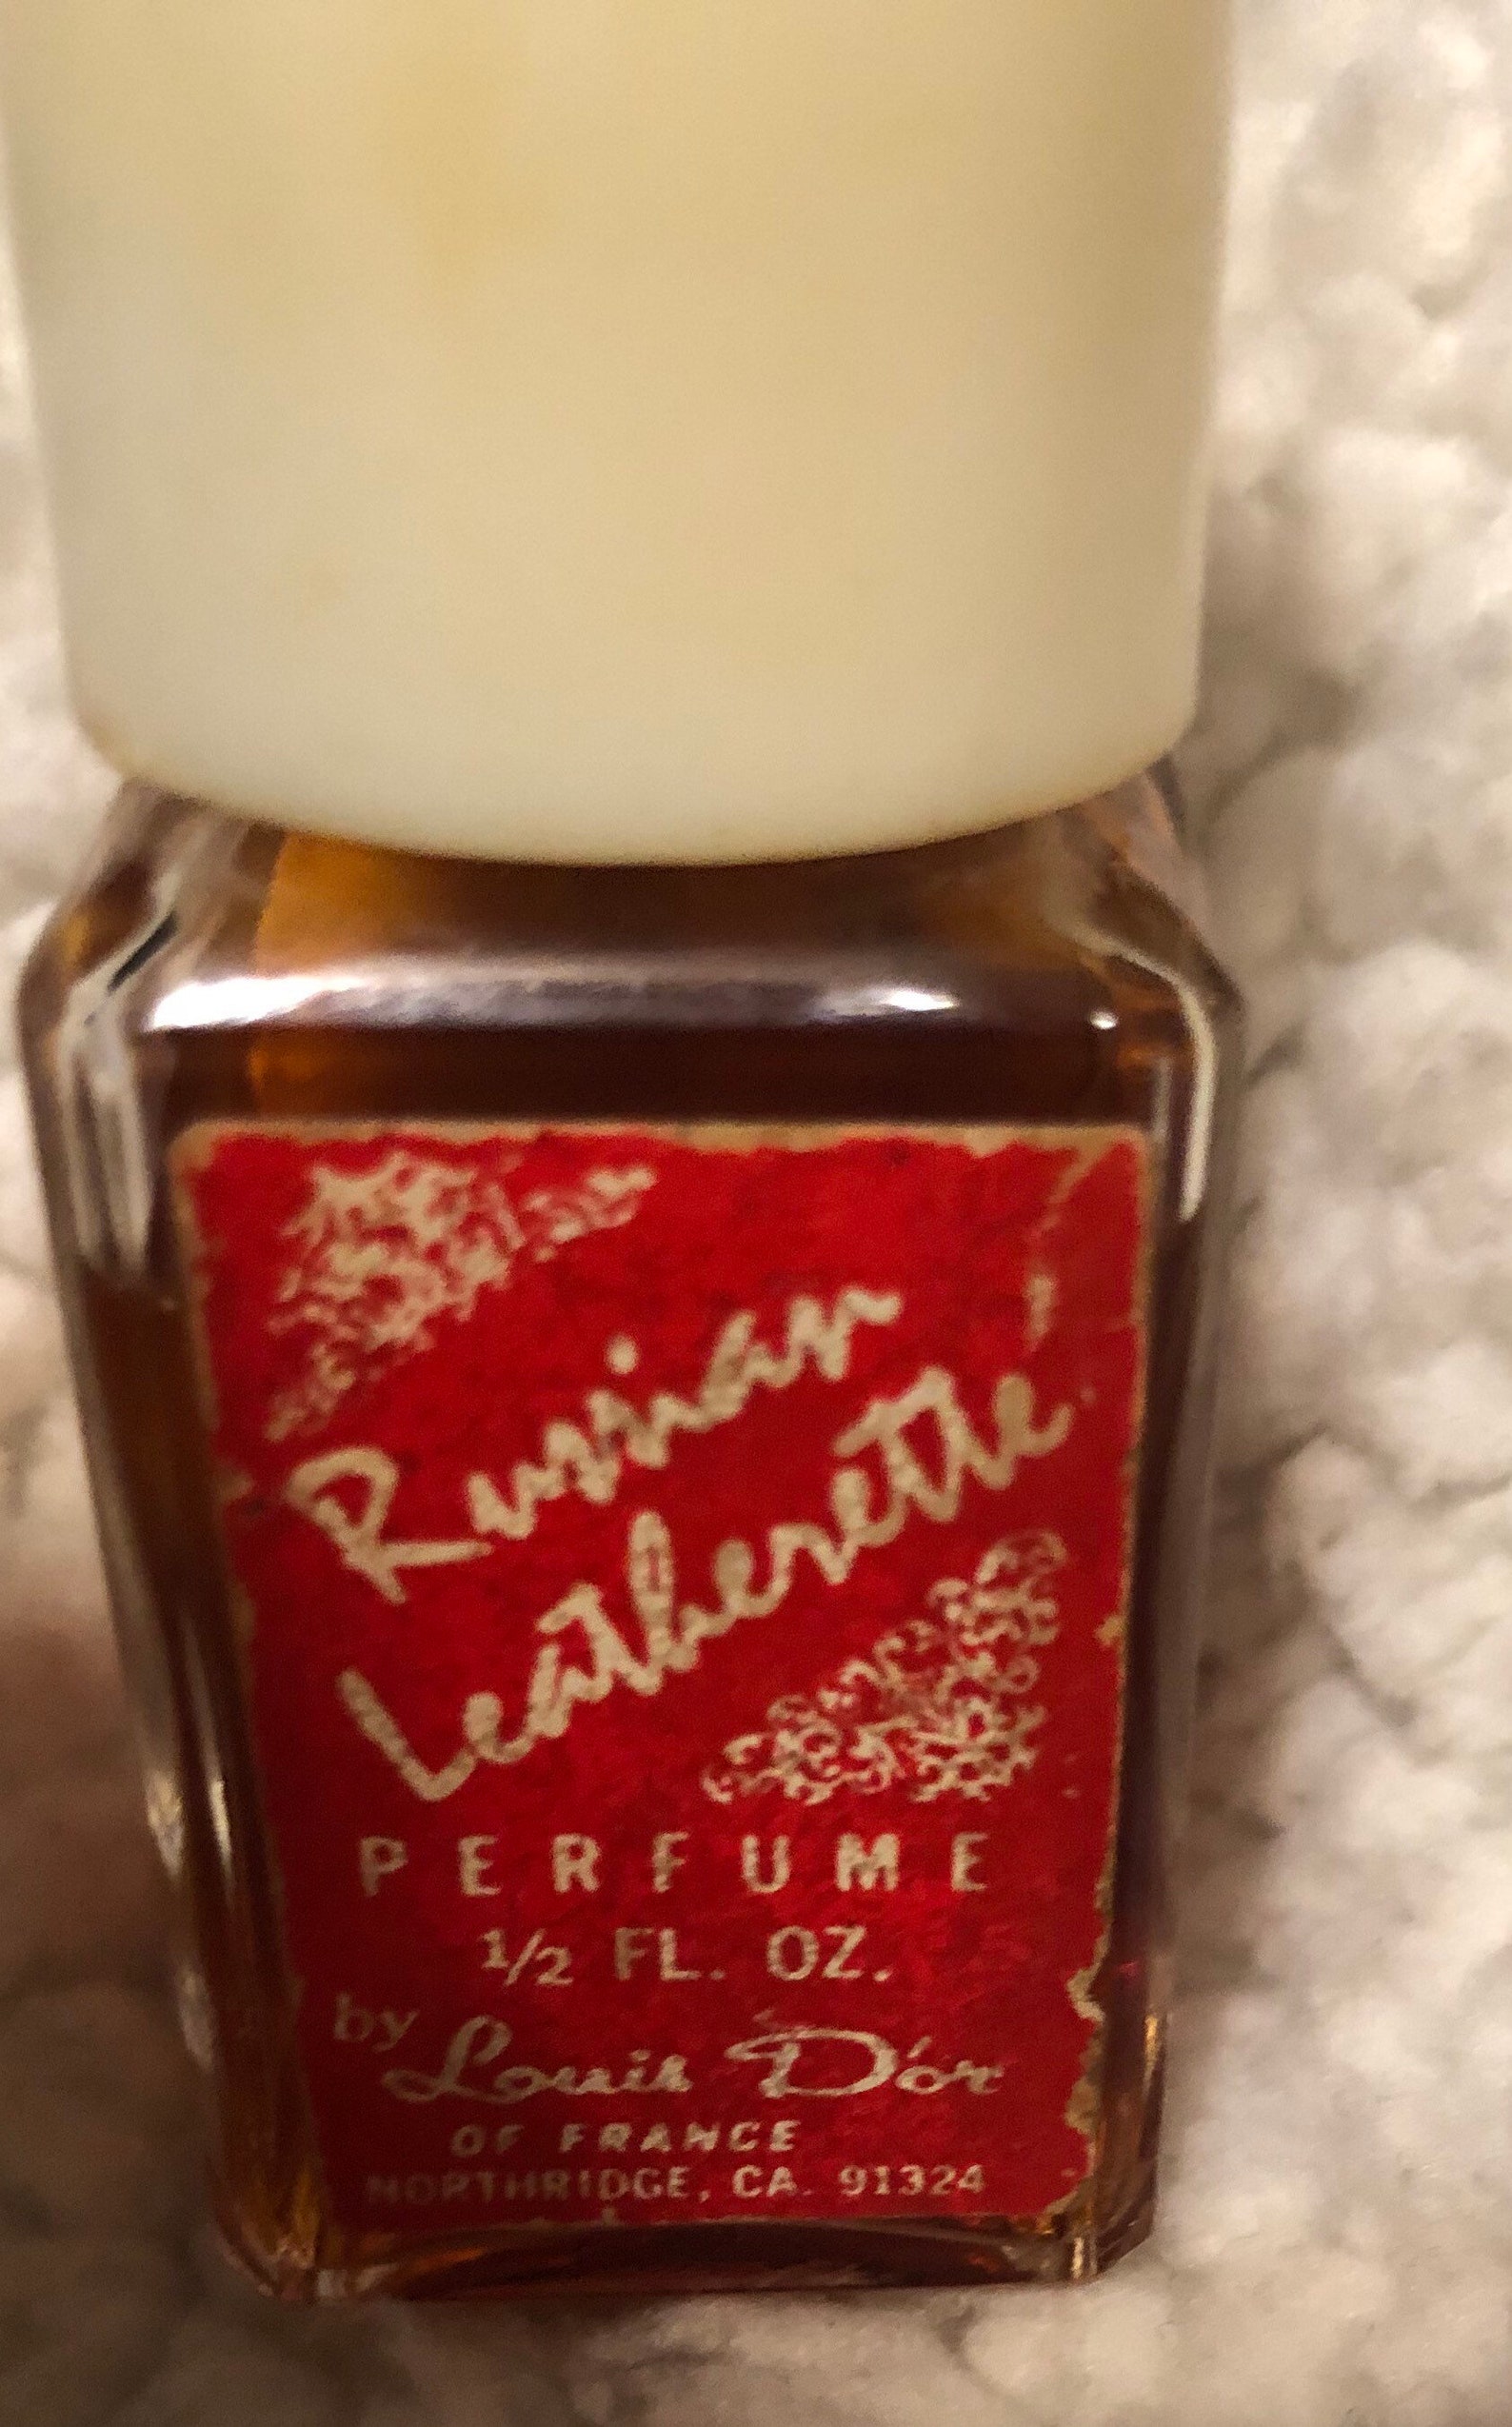 Russian Leatherette Louis Dor Perfume.5 Oz. Splash Perfume - Etsy